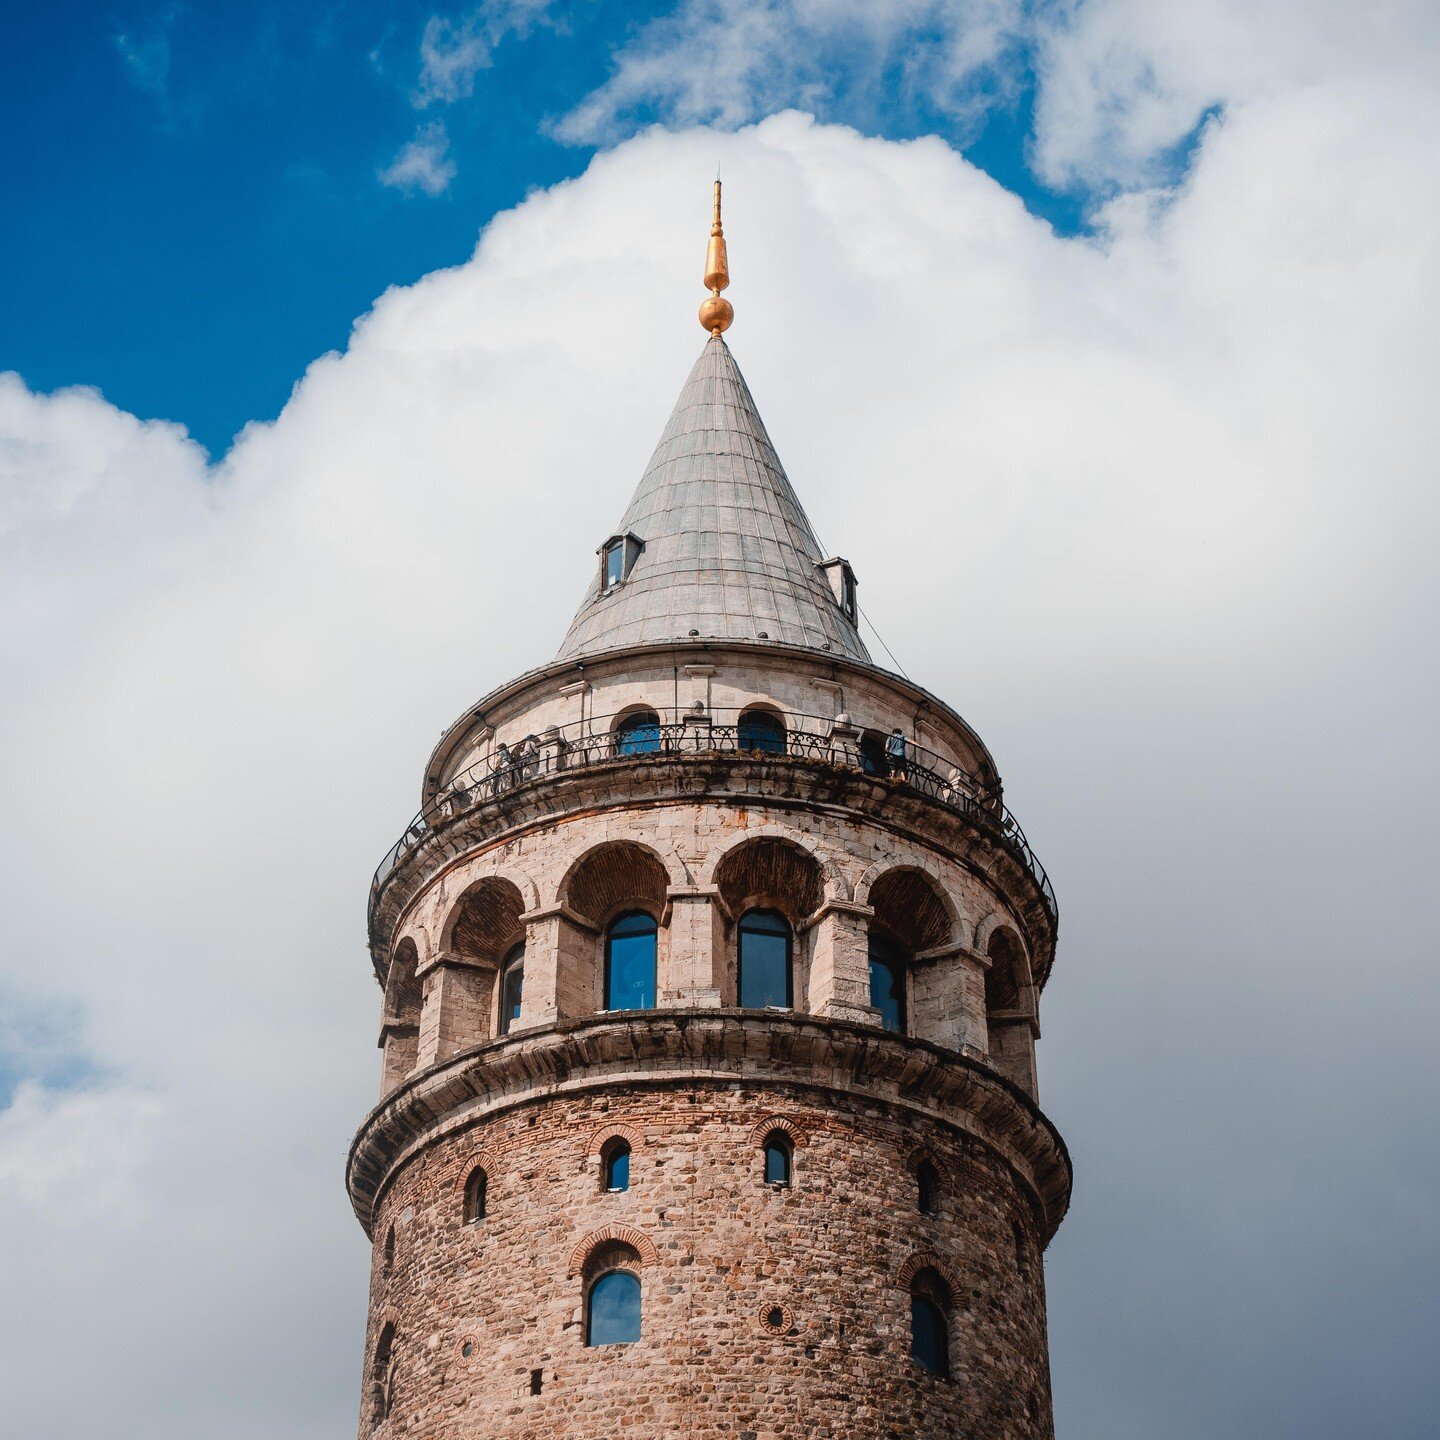 Galata Turm
-
-
-
#istanbul #turkey #galatadayim #galatakulesi #galata #lunaparkshop #conceptstore #turkishverymuch #uniquedesign #giftshop #bluemosque #travel #istanbullife #instagram #taksim #istanbulturkey #t&uuml;rkiye #travelphotography #bosphor